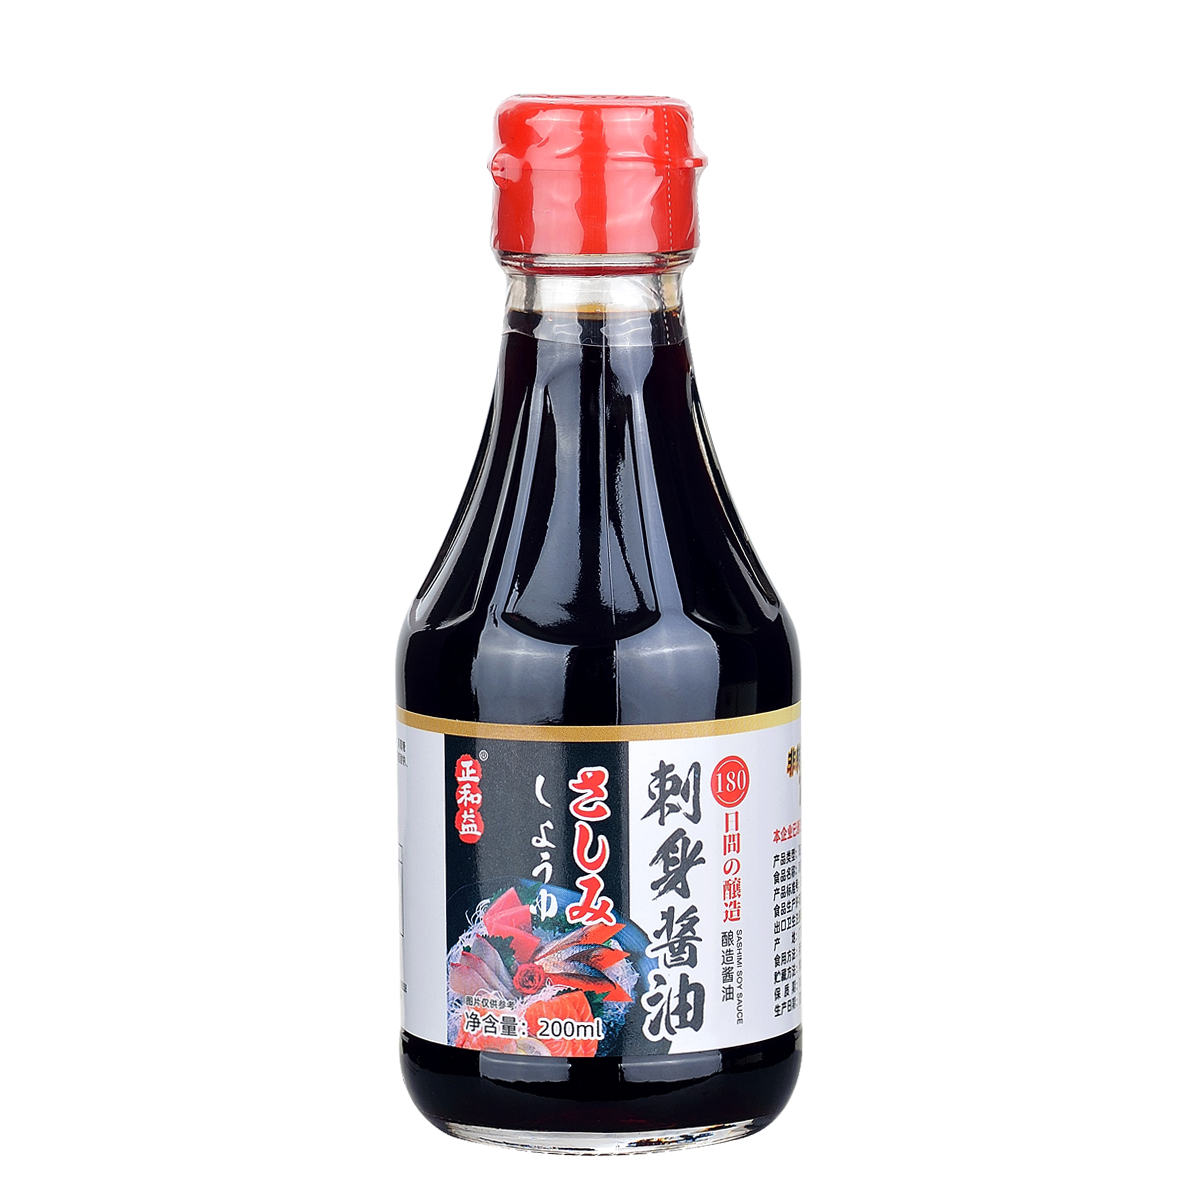 Sashimi soy sauce 200ml